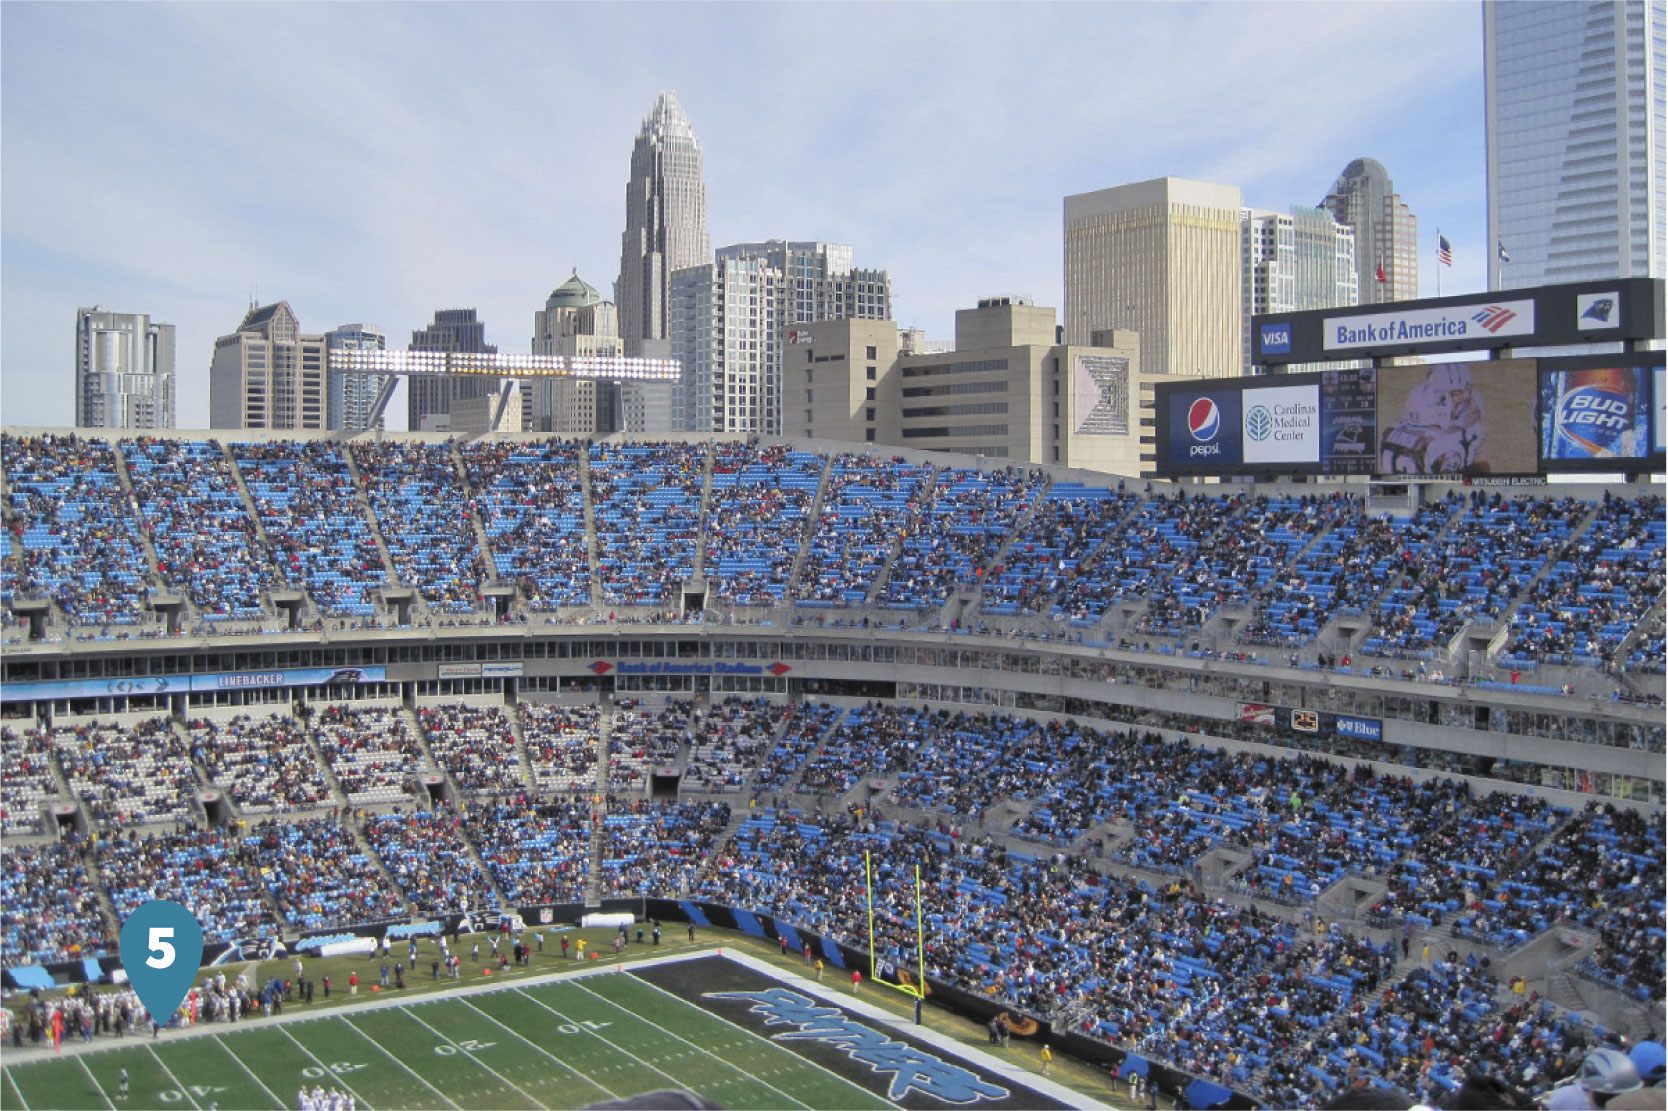 Fans filling the Bank of America Stadium in Charlotte, North Carolina